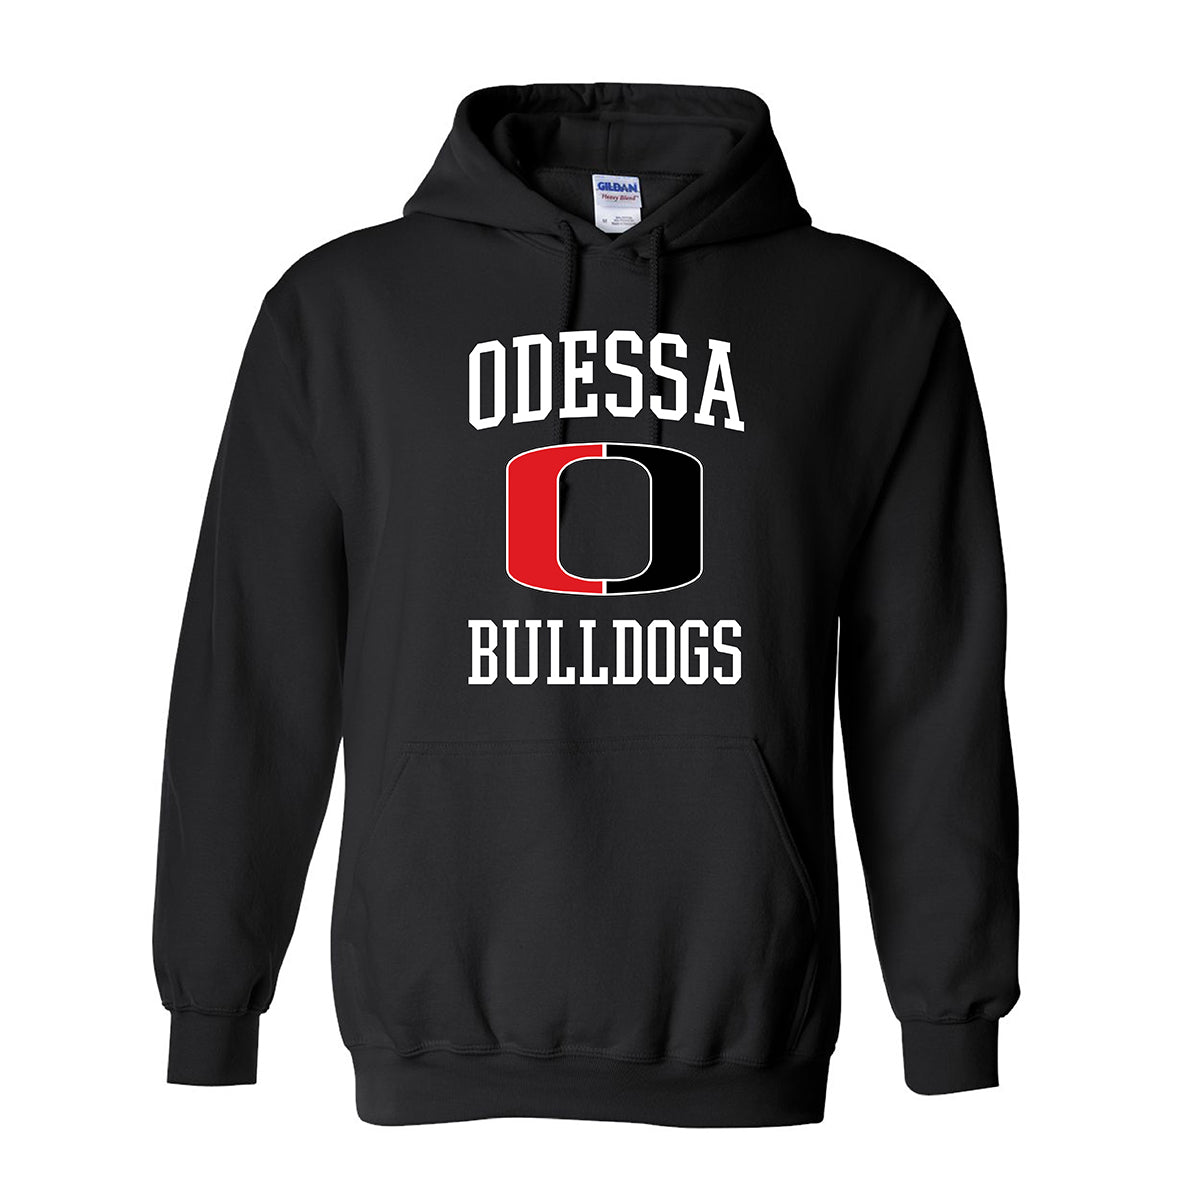 Odessa "O" Bulldogs Gildan Heavy Blend Hooded Sweatshirt in Black